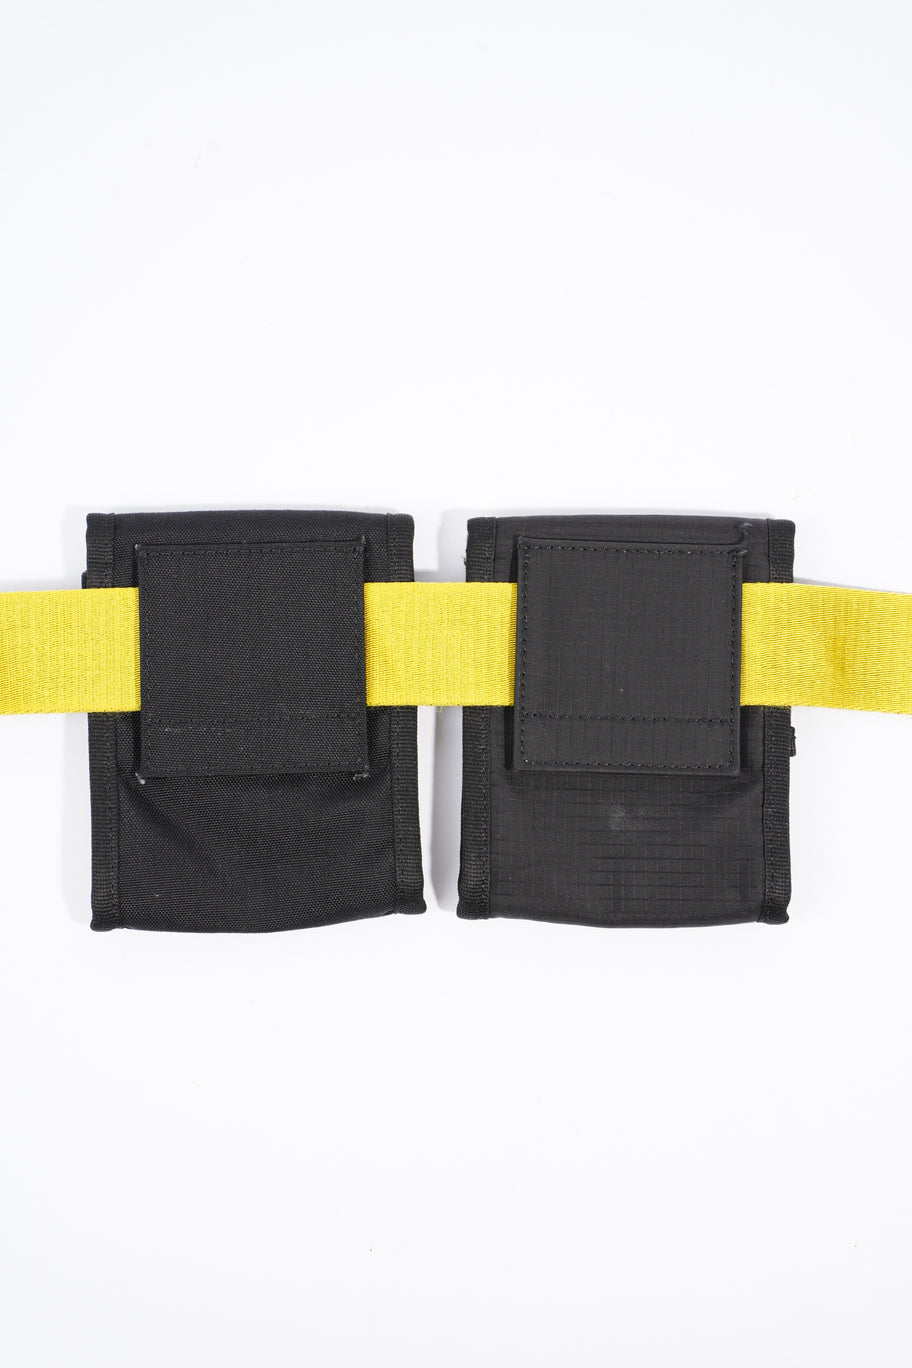 Two Pocket Belt Yellow / Black Fabric Image 5